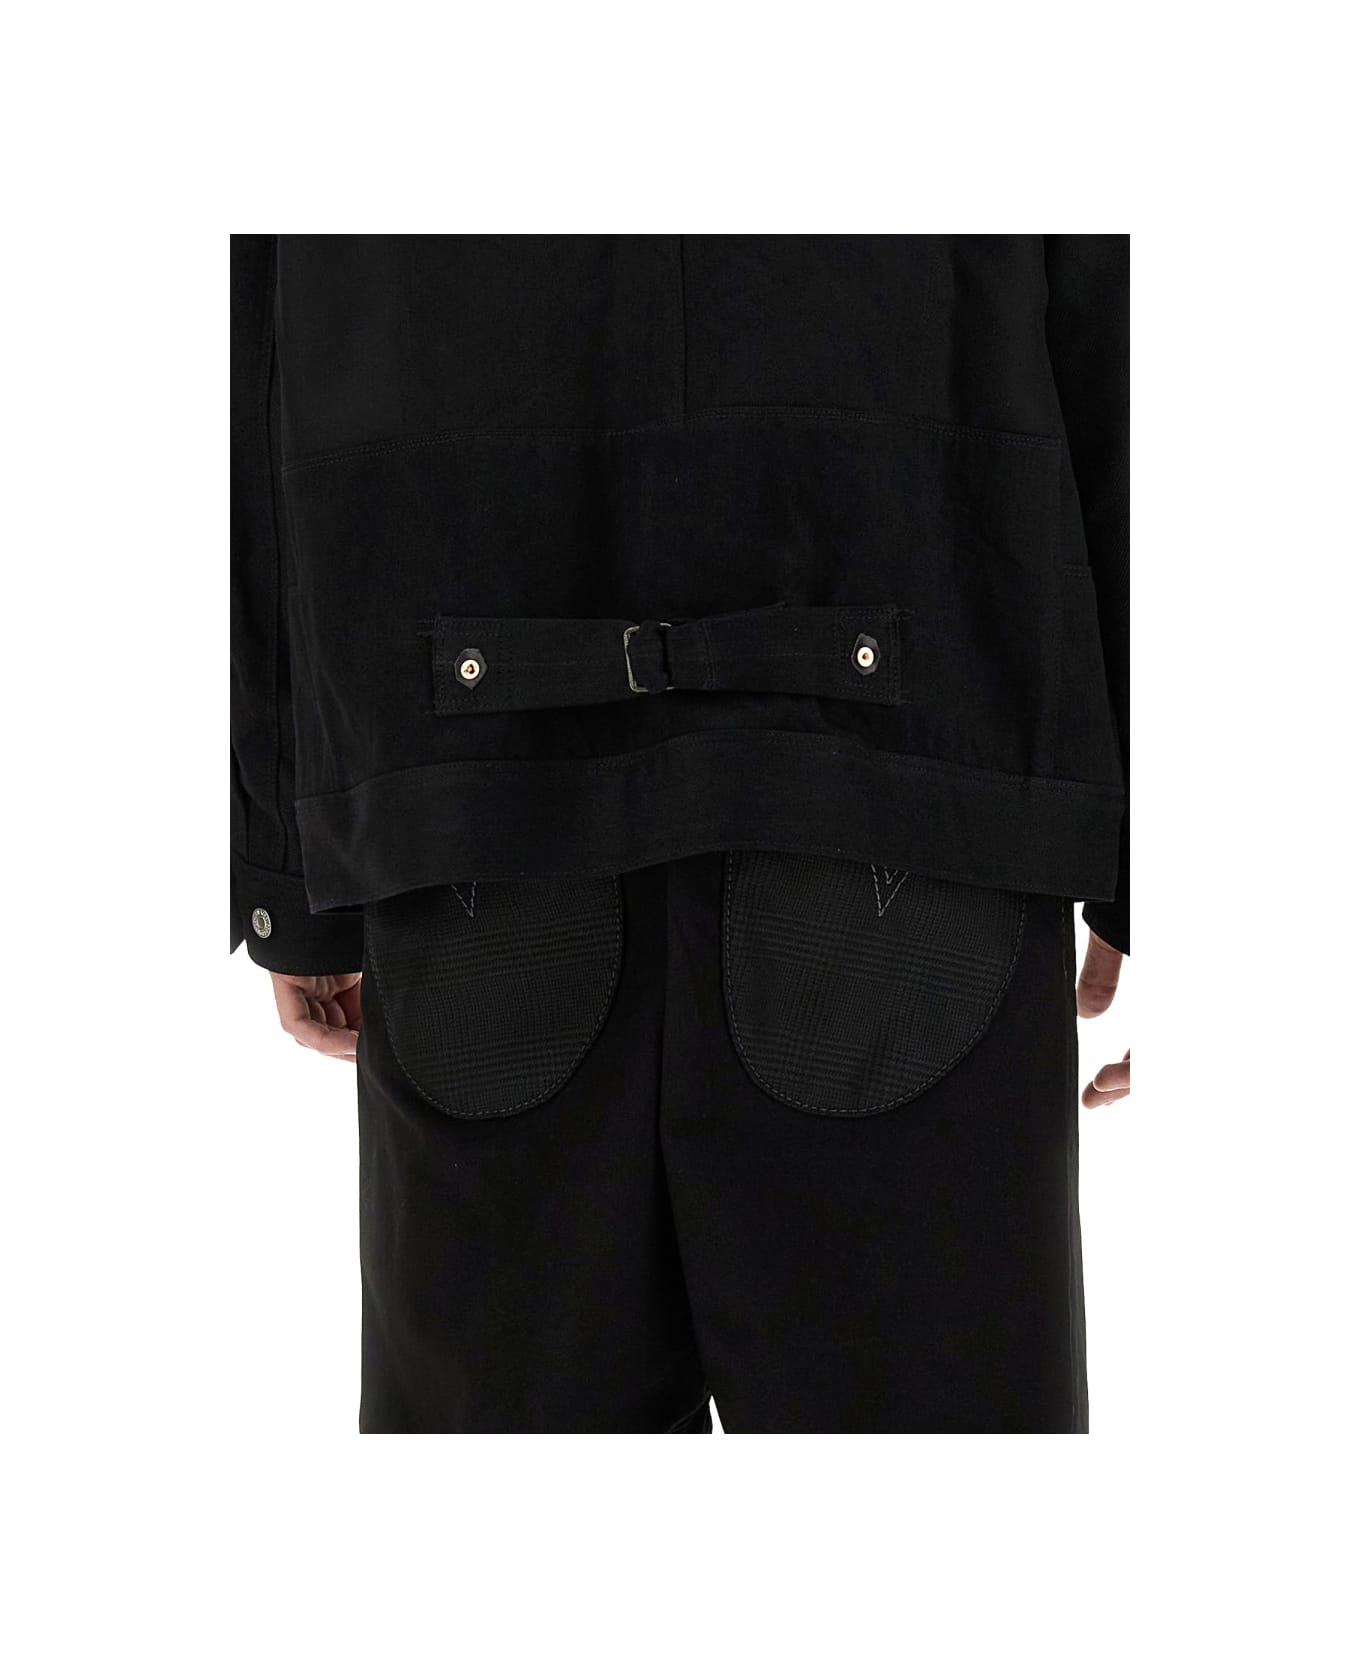 Junya Watanabe X Levi's Jacket - BLACK ジャケット